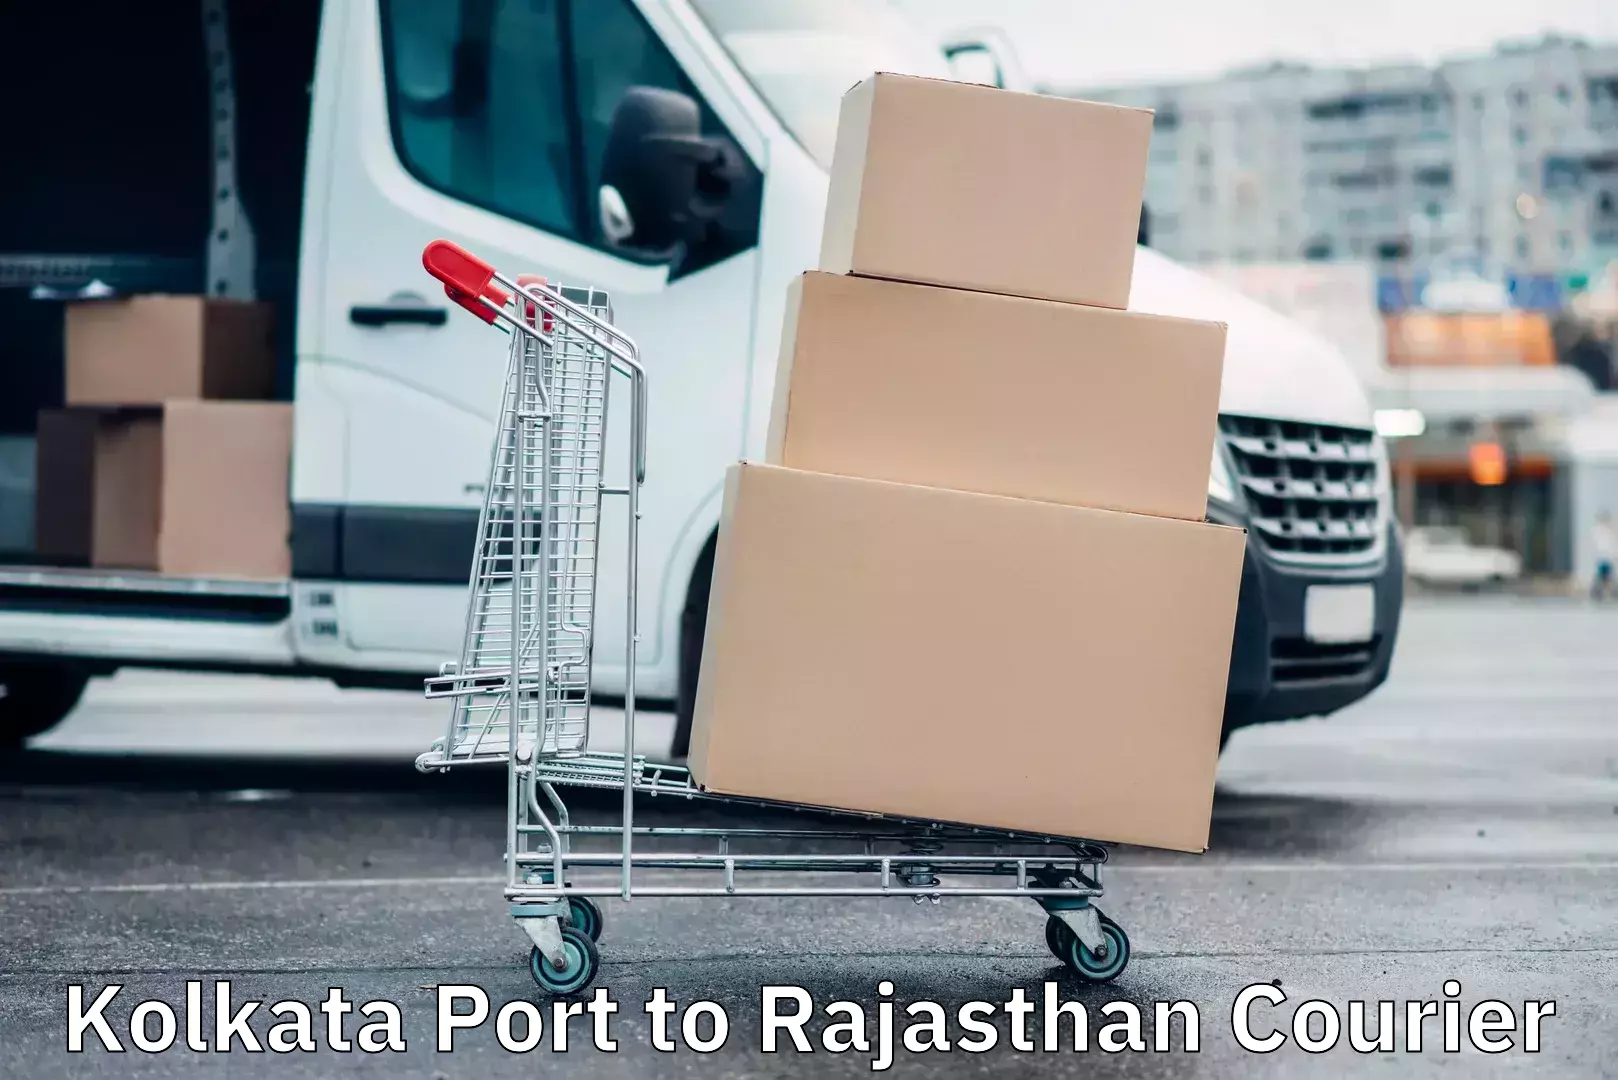 Quick dispatch service Kolkata Port to Rajasthan